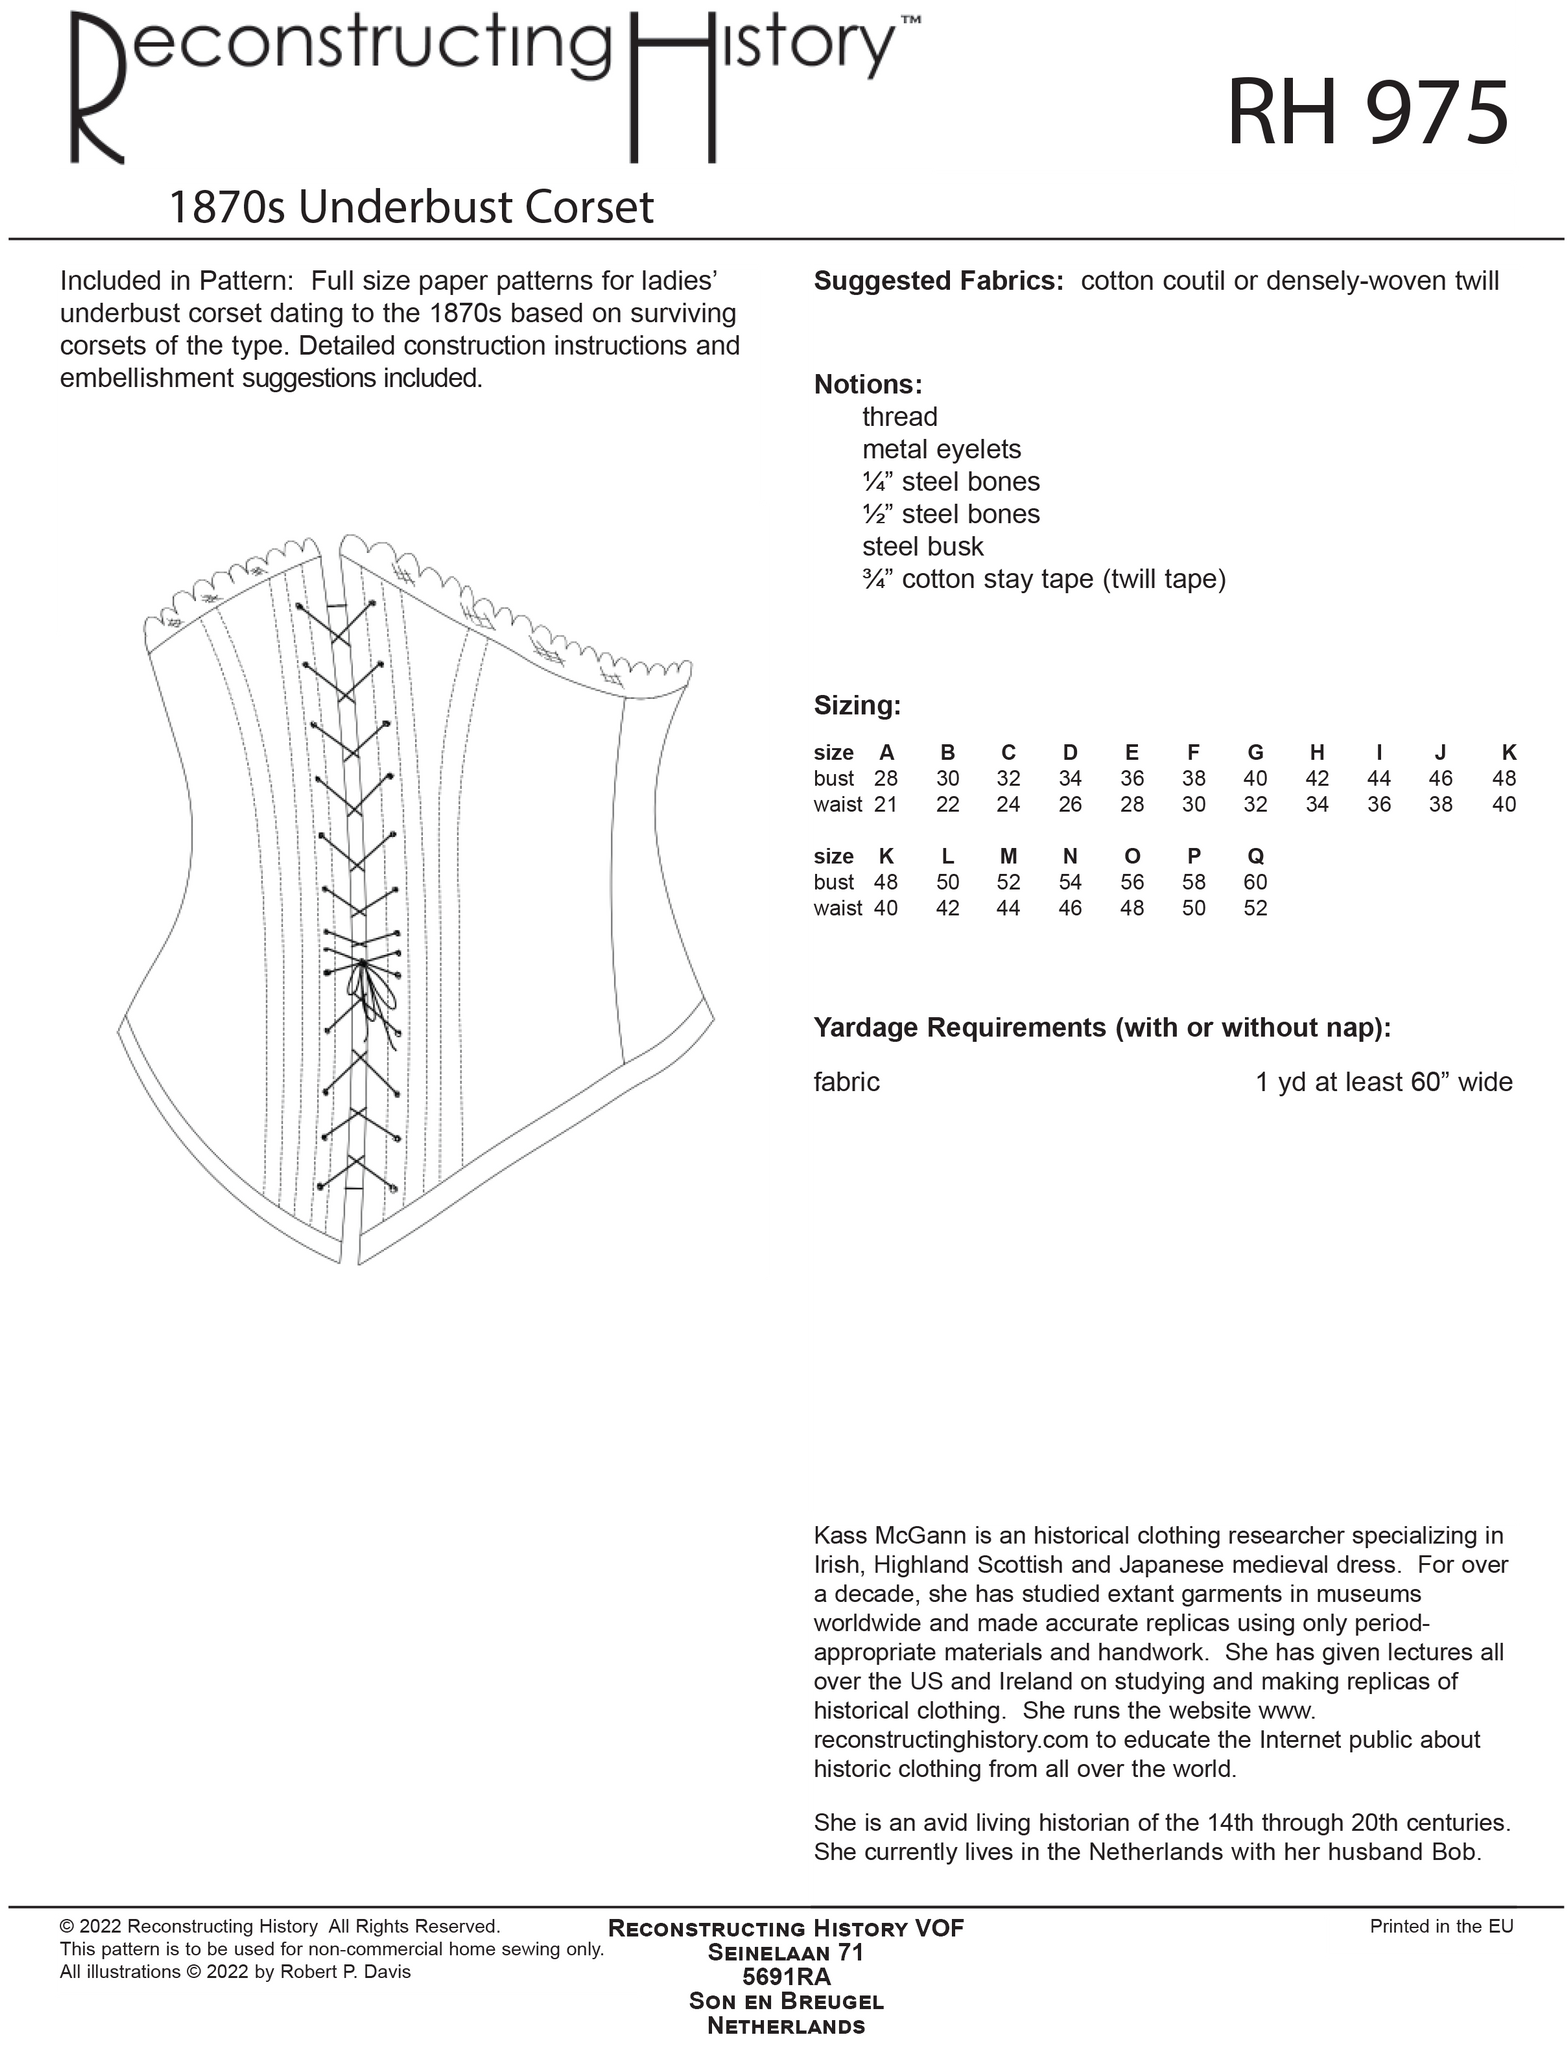 RH975 — Ladies' 1890s Underbust Corset sewing pattern